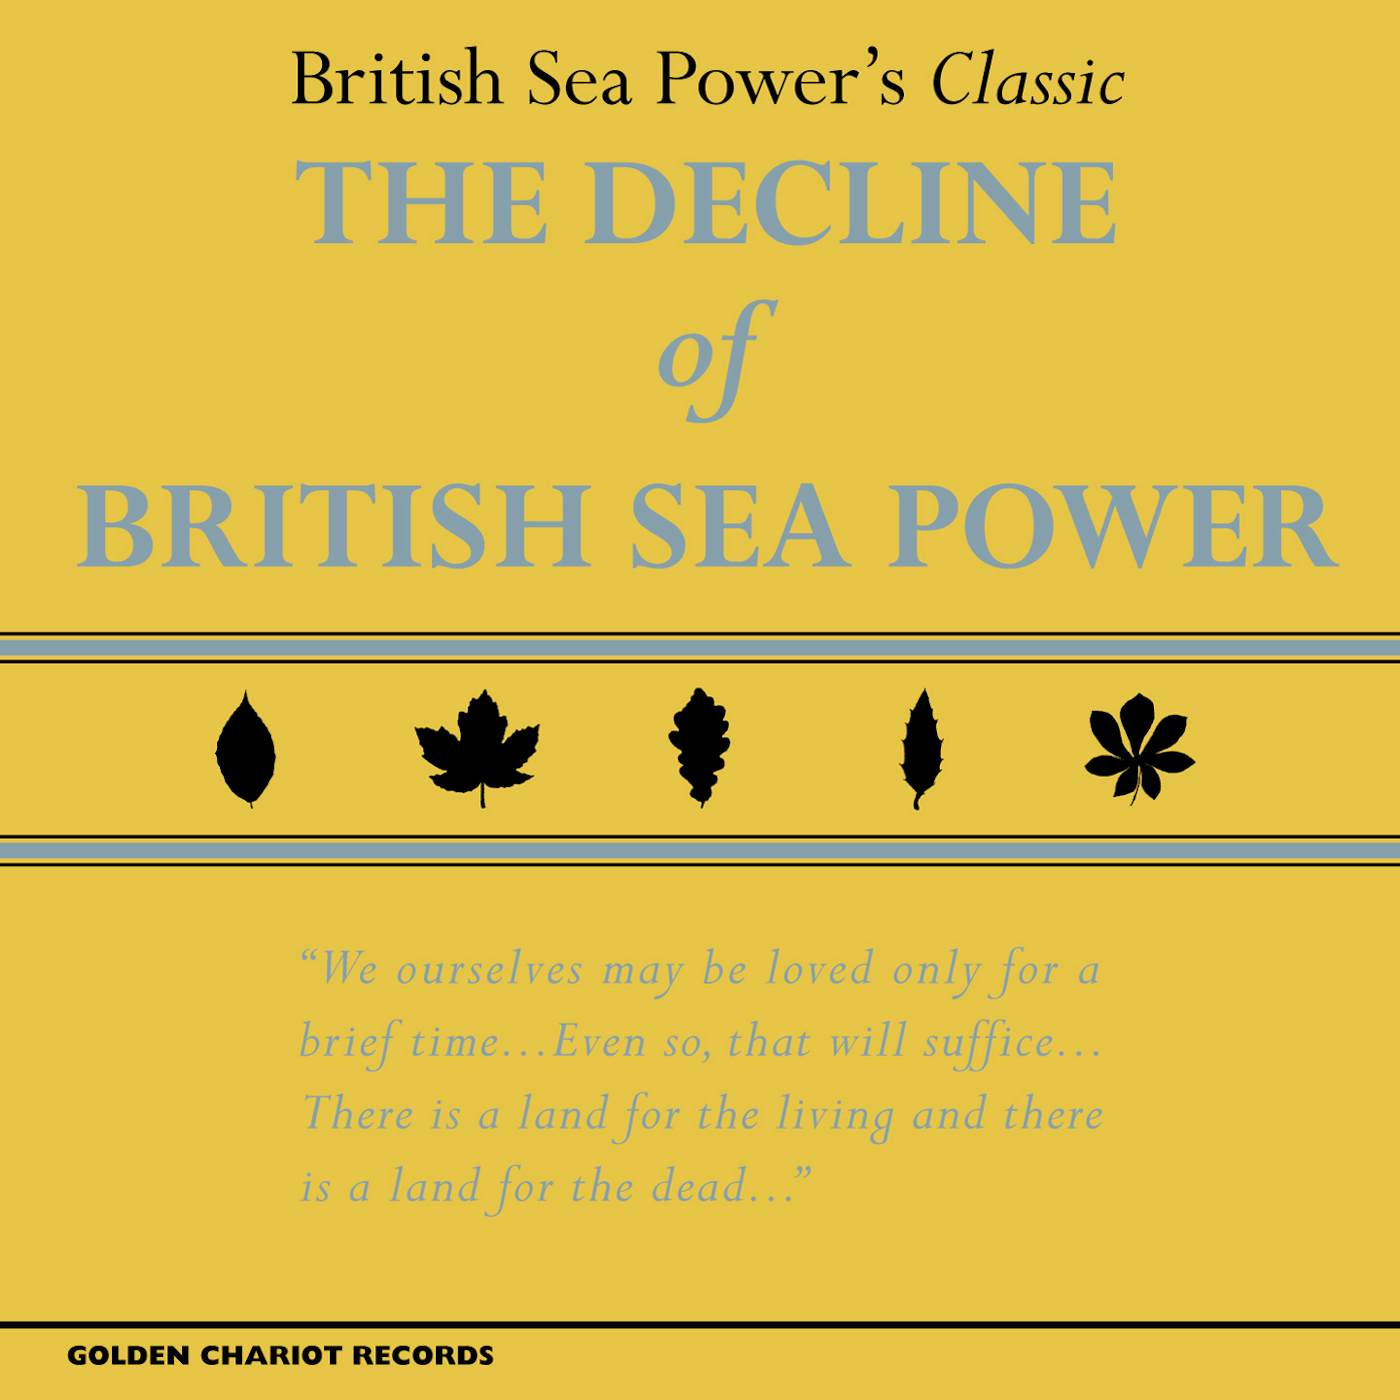 DECLINE OF BRITISH SEA POWER BOX CD